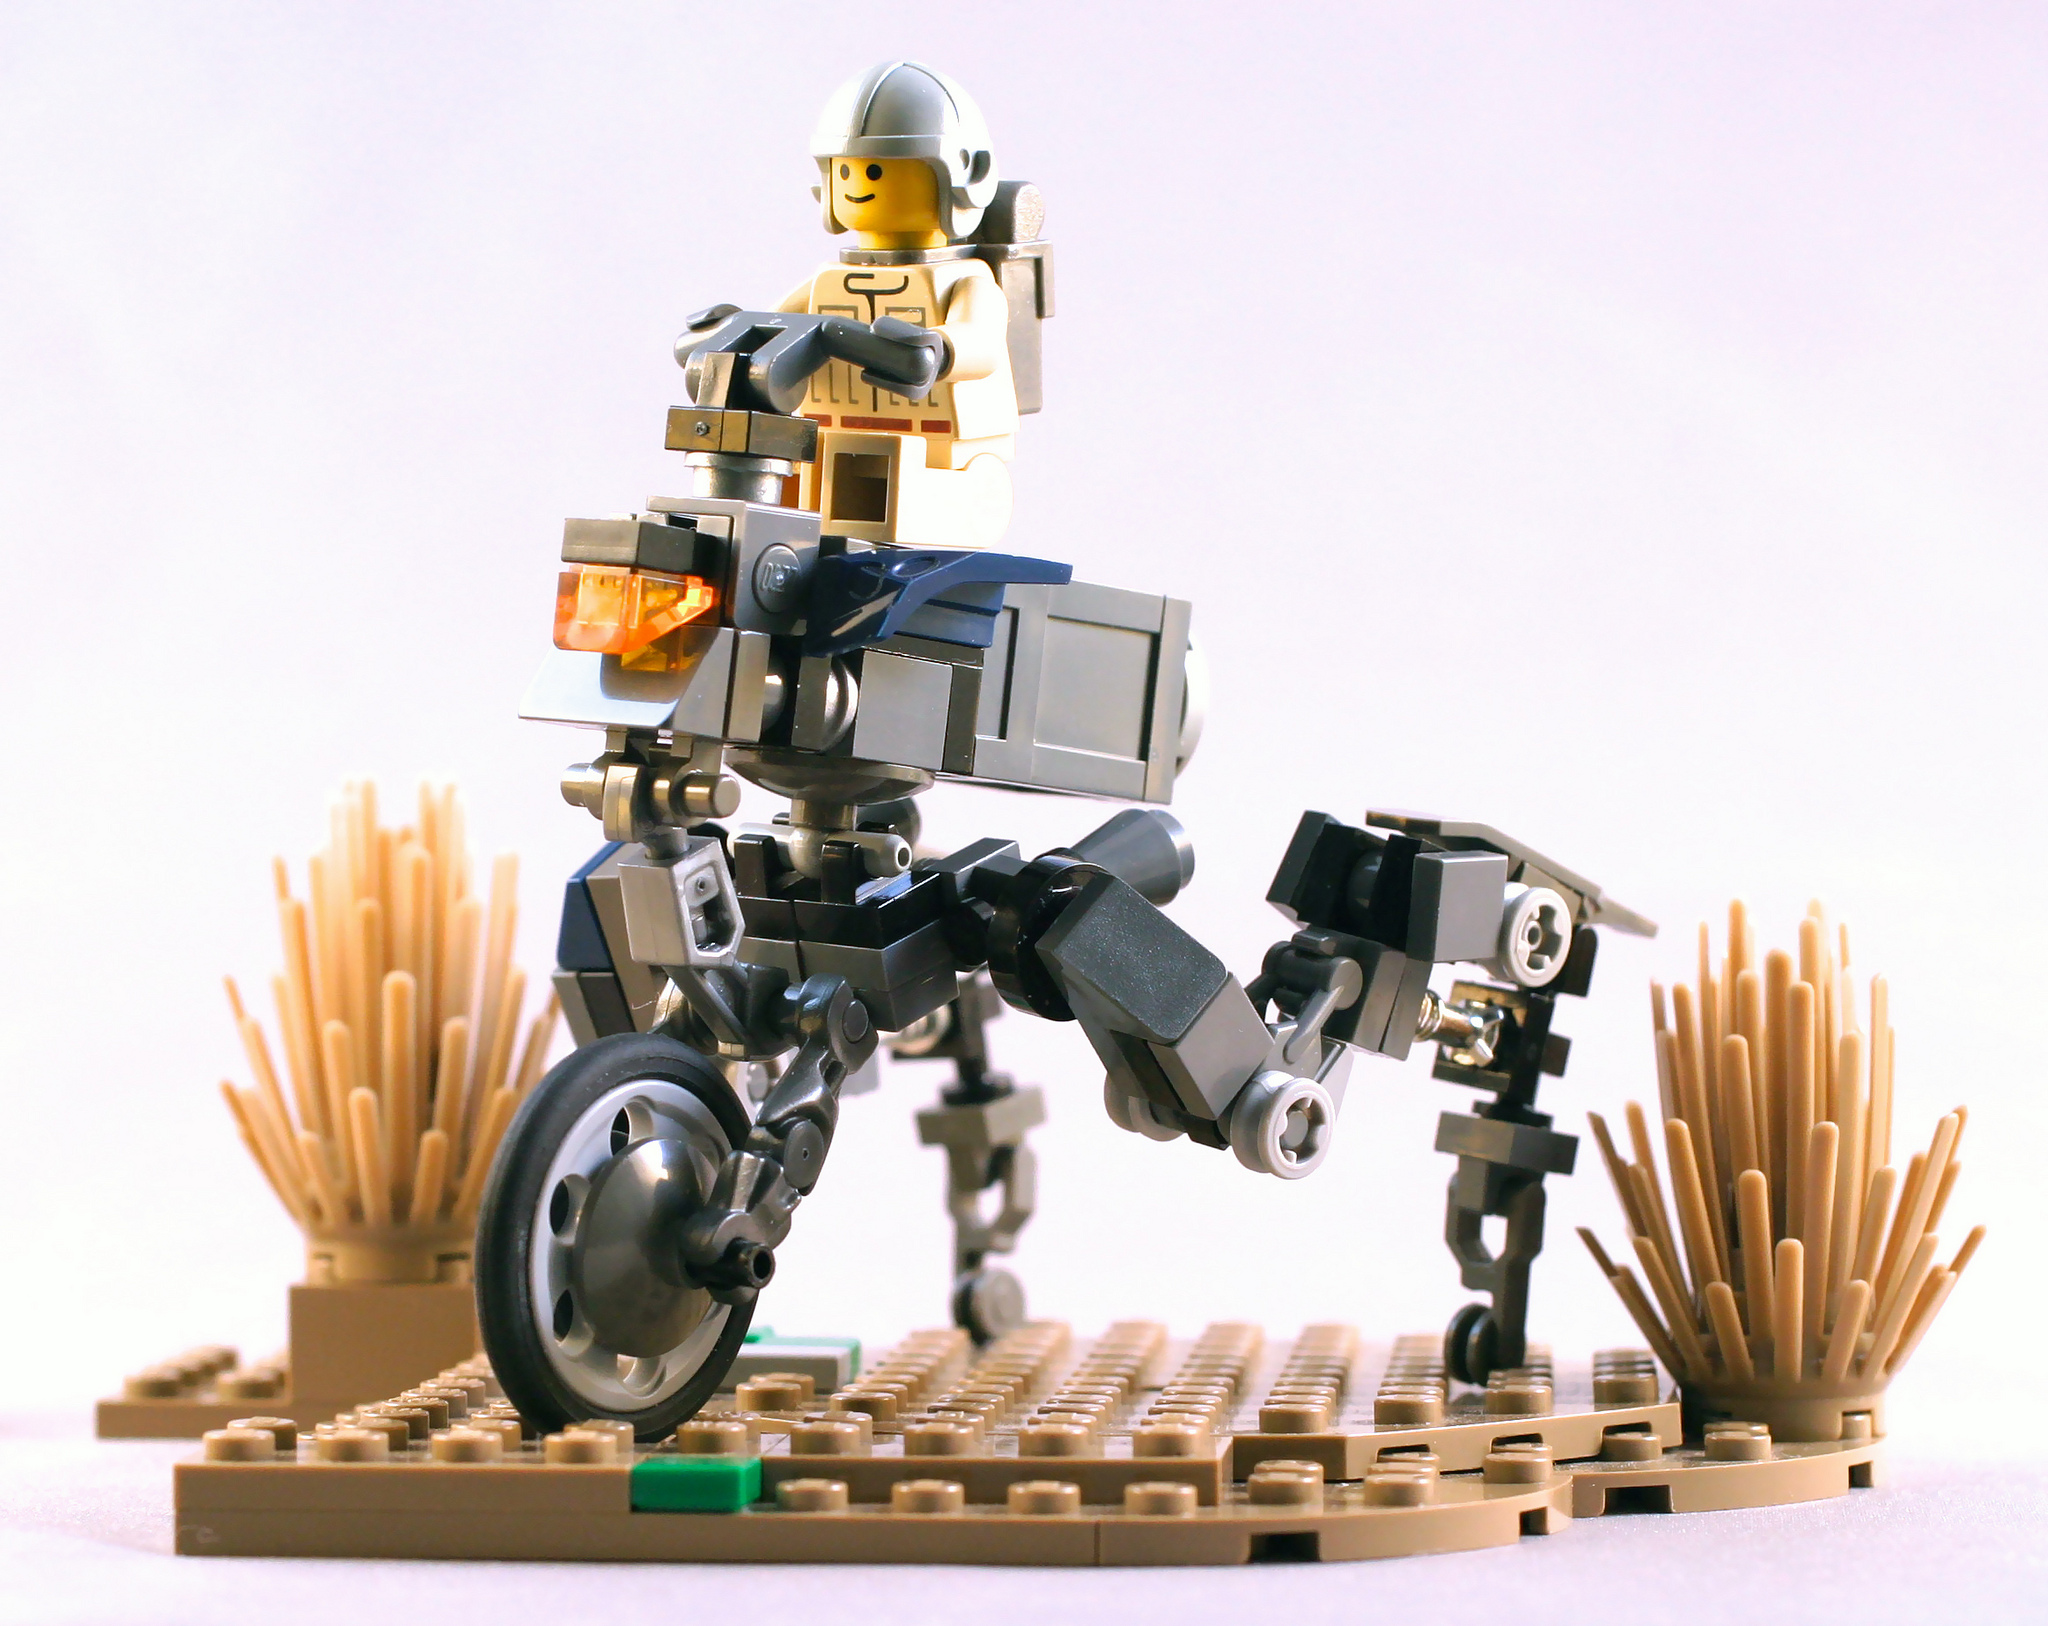 Foto de una máquina pilotada montada a base de componentes tipo "Lego".